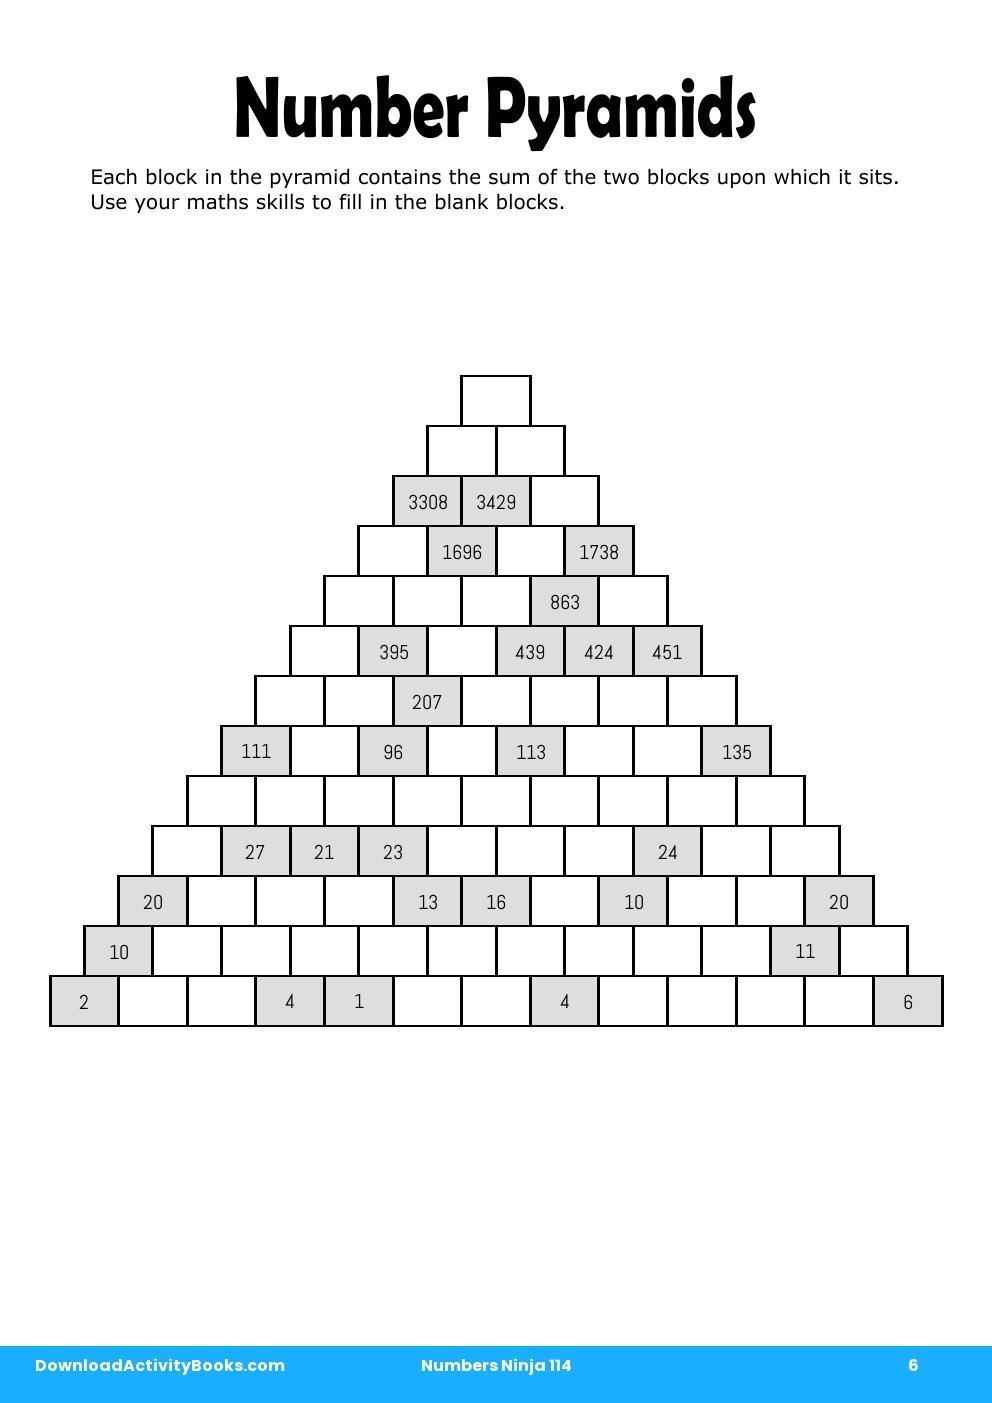 Number Pyramids in Numbers Ninja 114